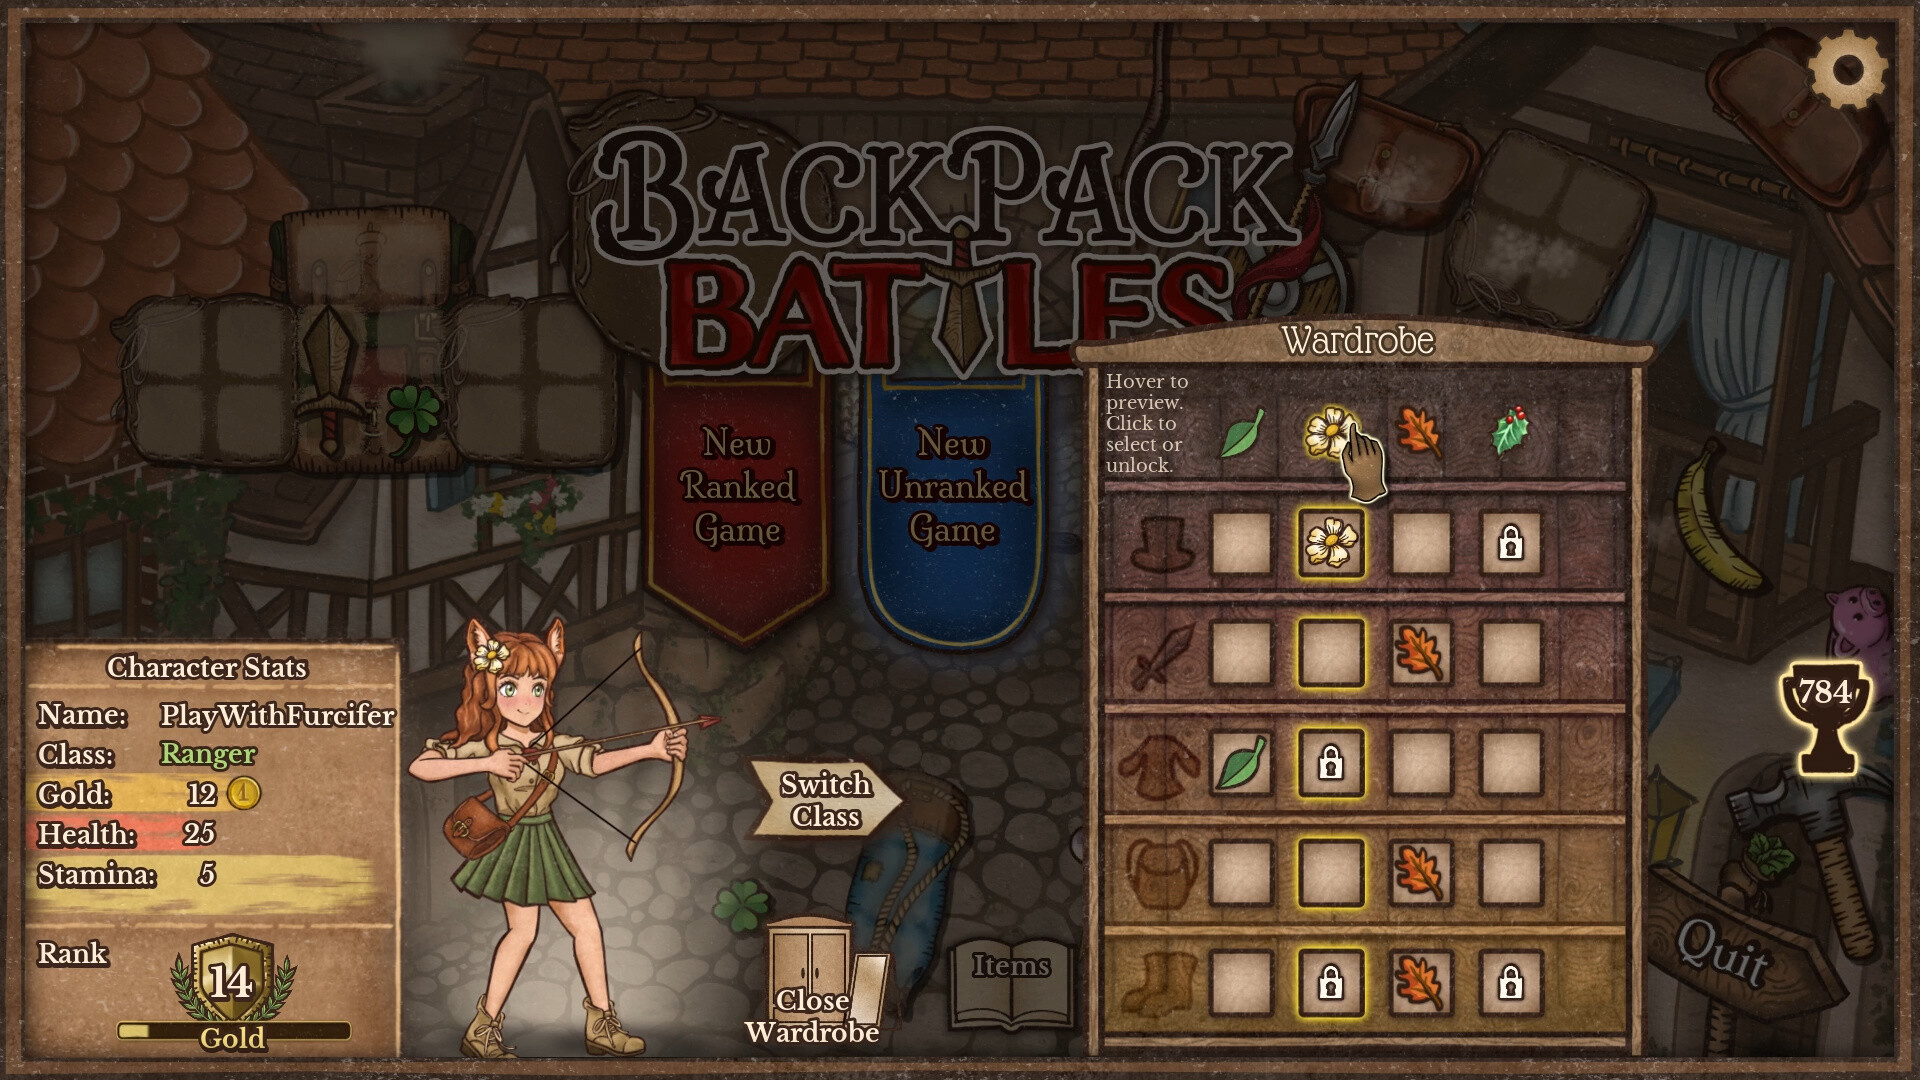 Backpack Battles on Steam